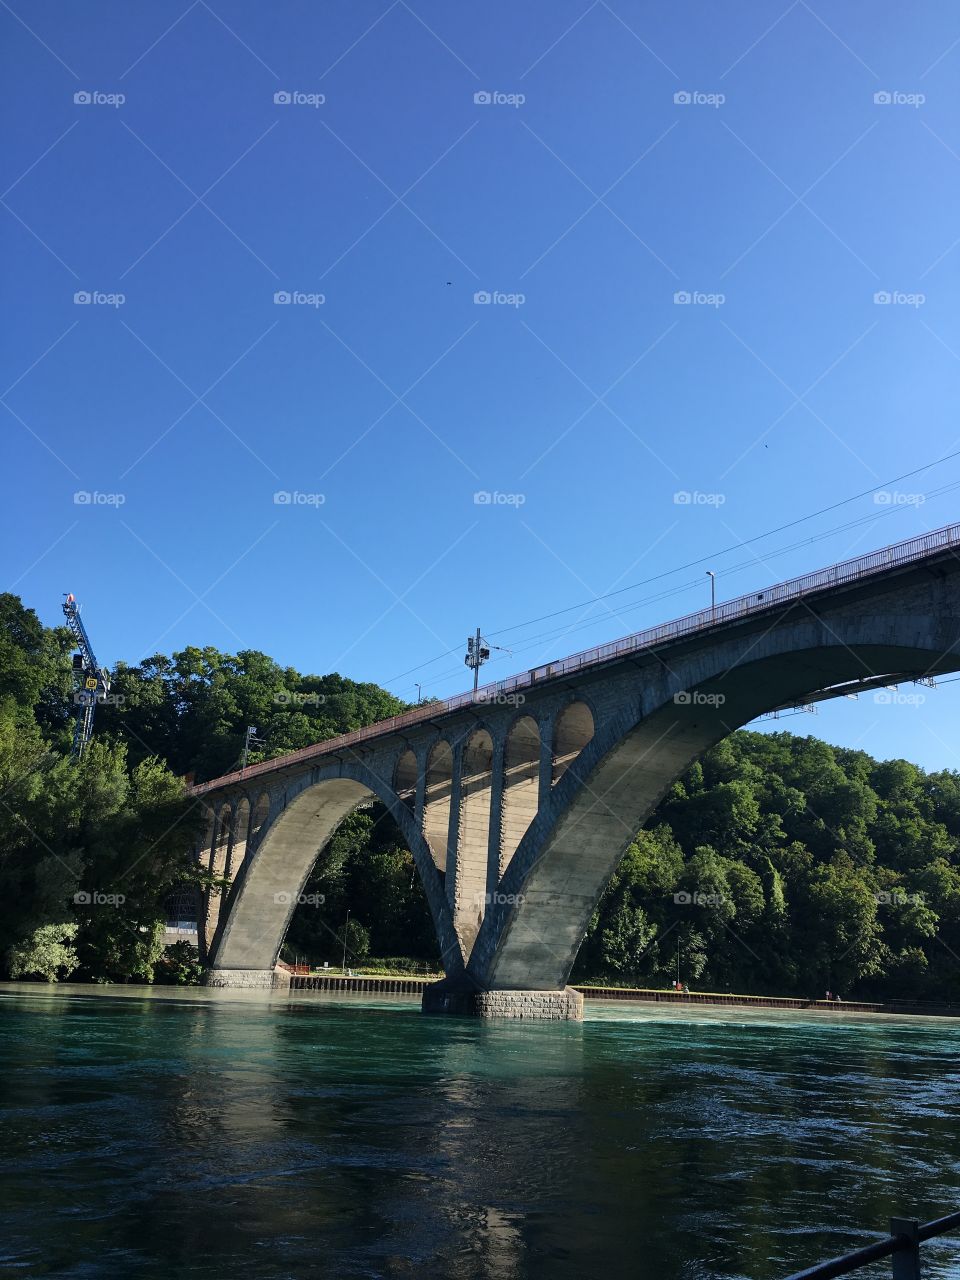 Bridge in Switzerland 